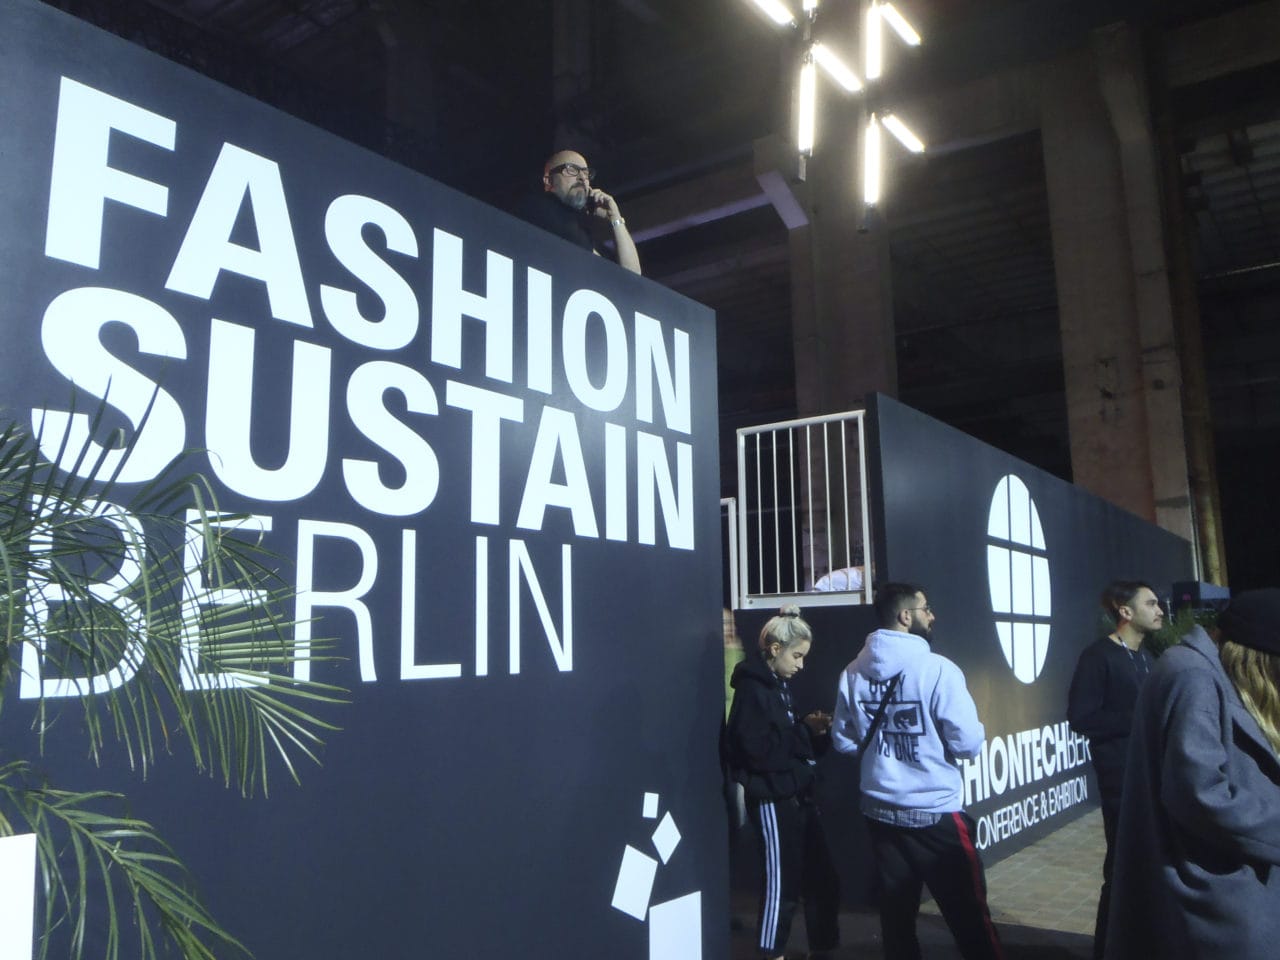 Ethical Fashion Show Berlin, FashionSUSTAIN, GreenShowroom: Jan '18